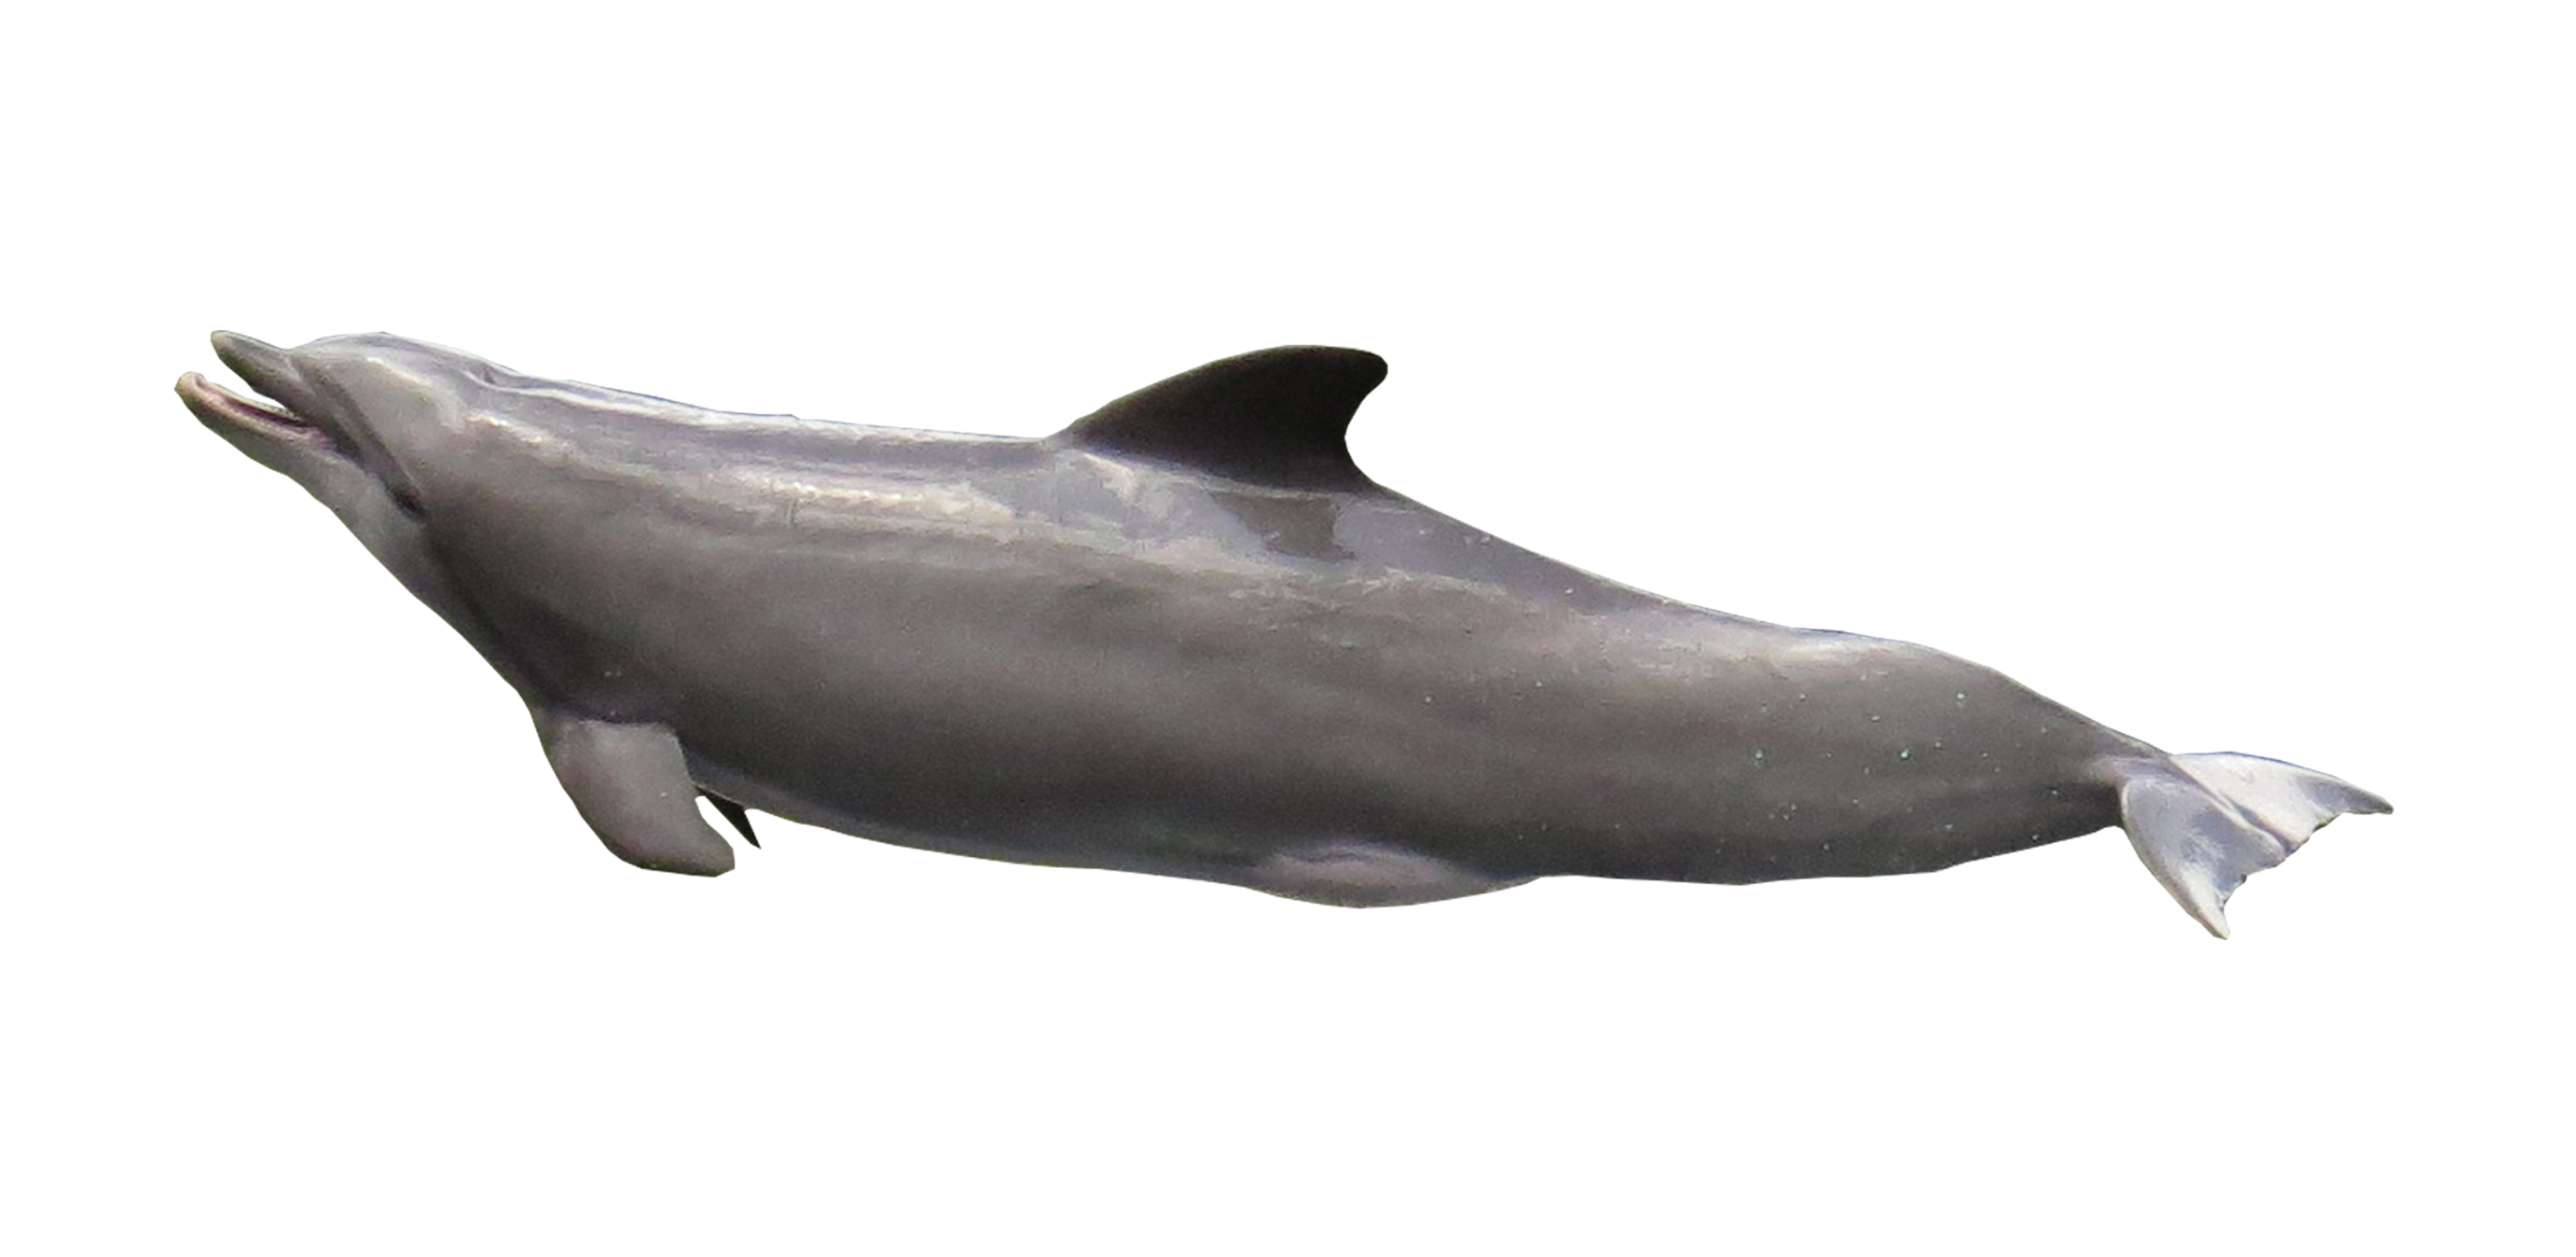 Dolphin in the sea photo